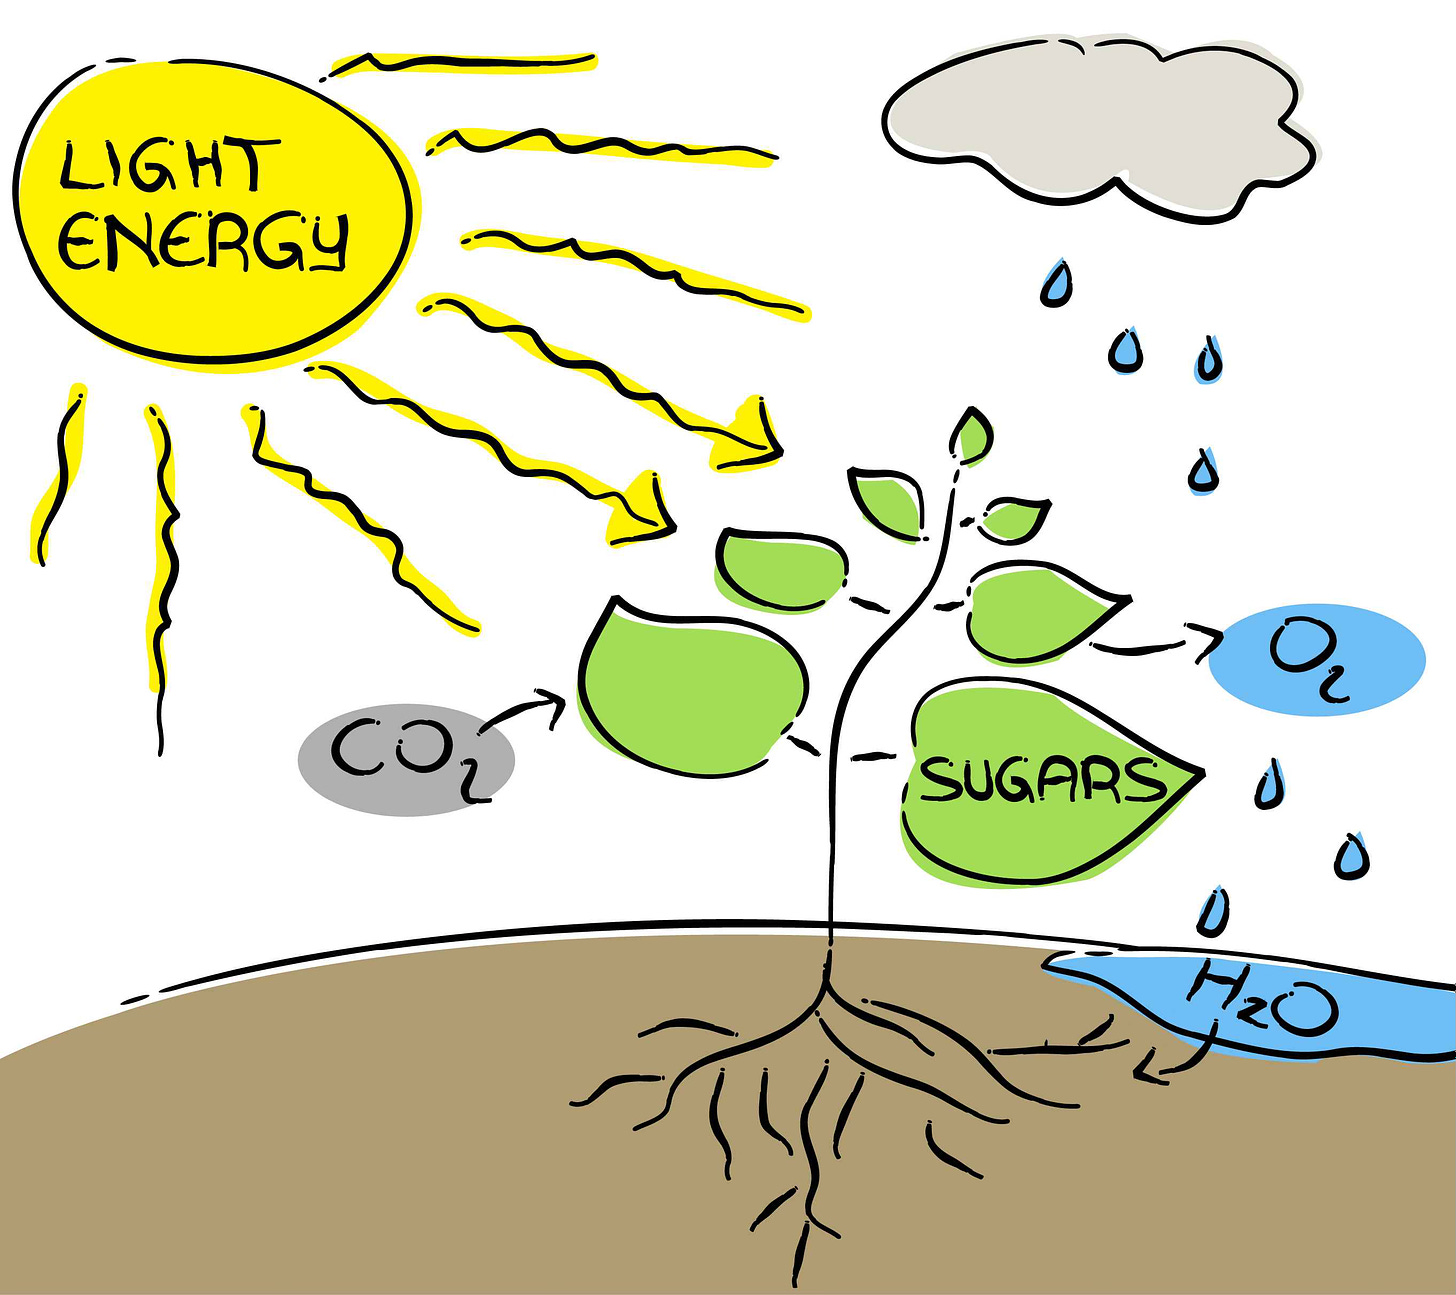 Photosynthesis diagram